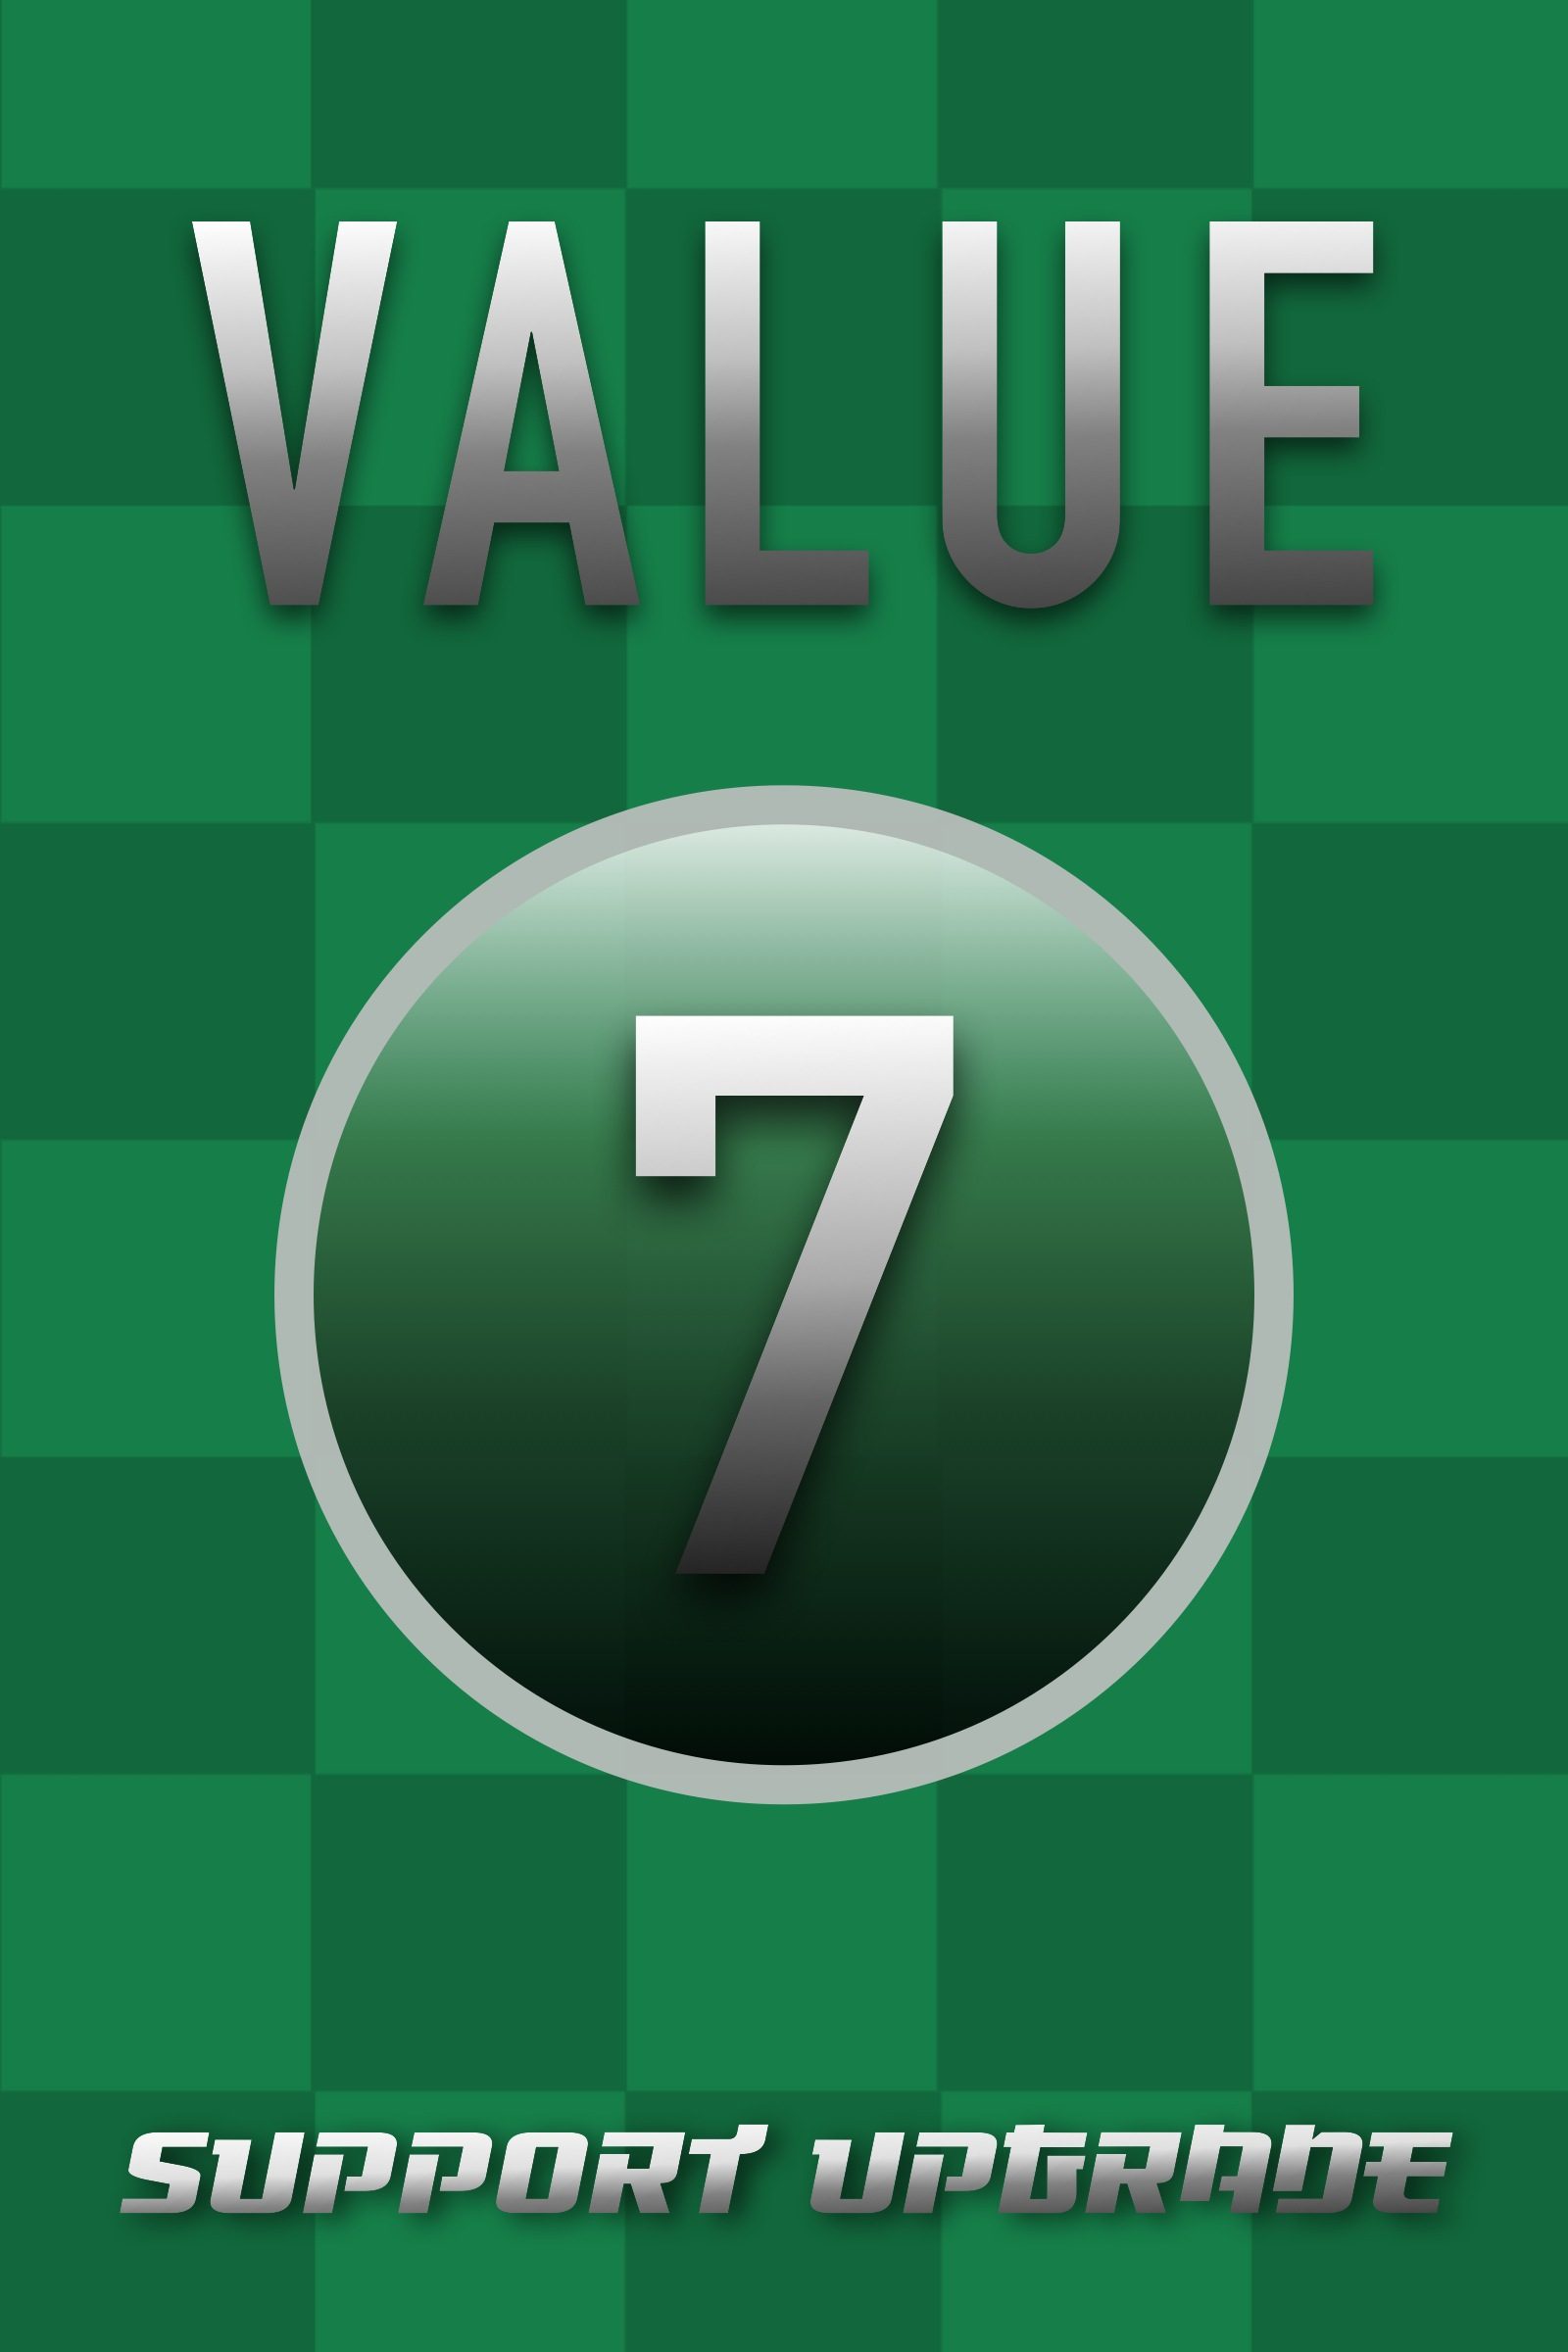 value7-support-upgrade.jpeg